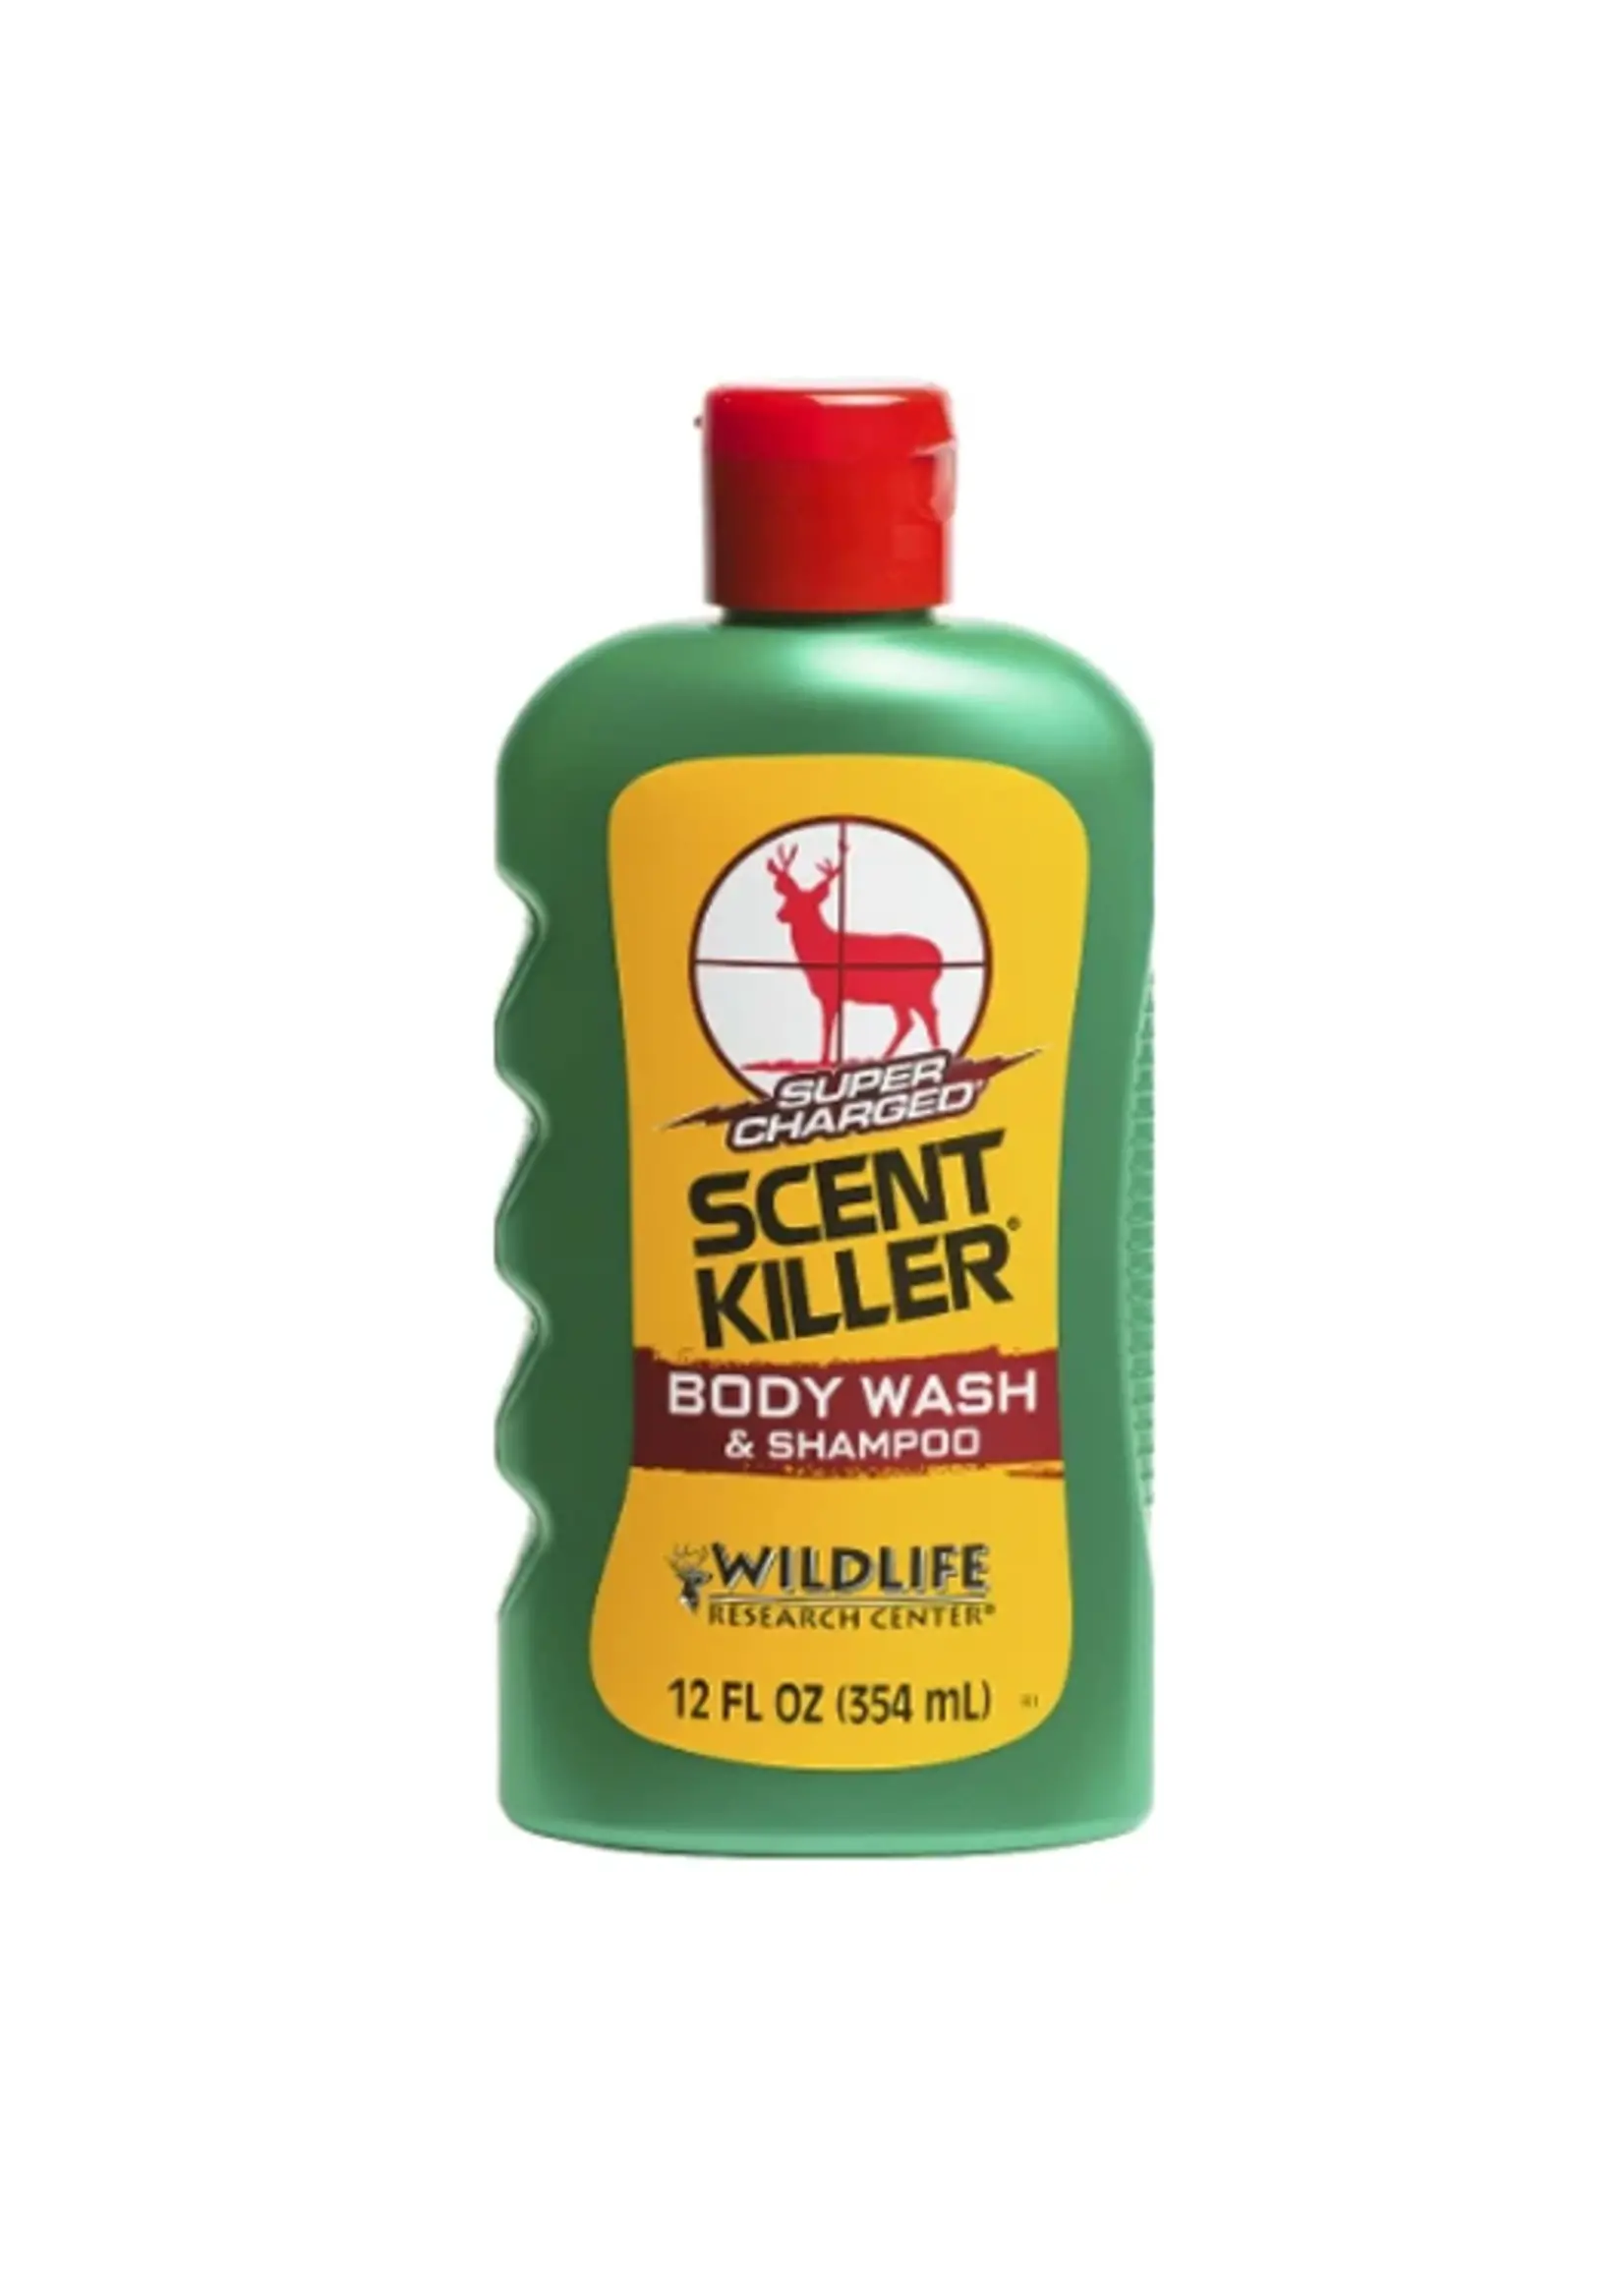 Wildlife Research Center body wash anti-odor